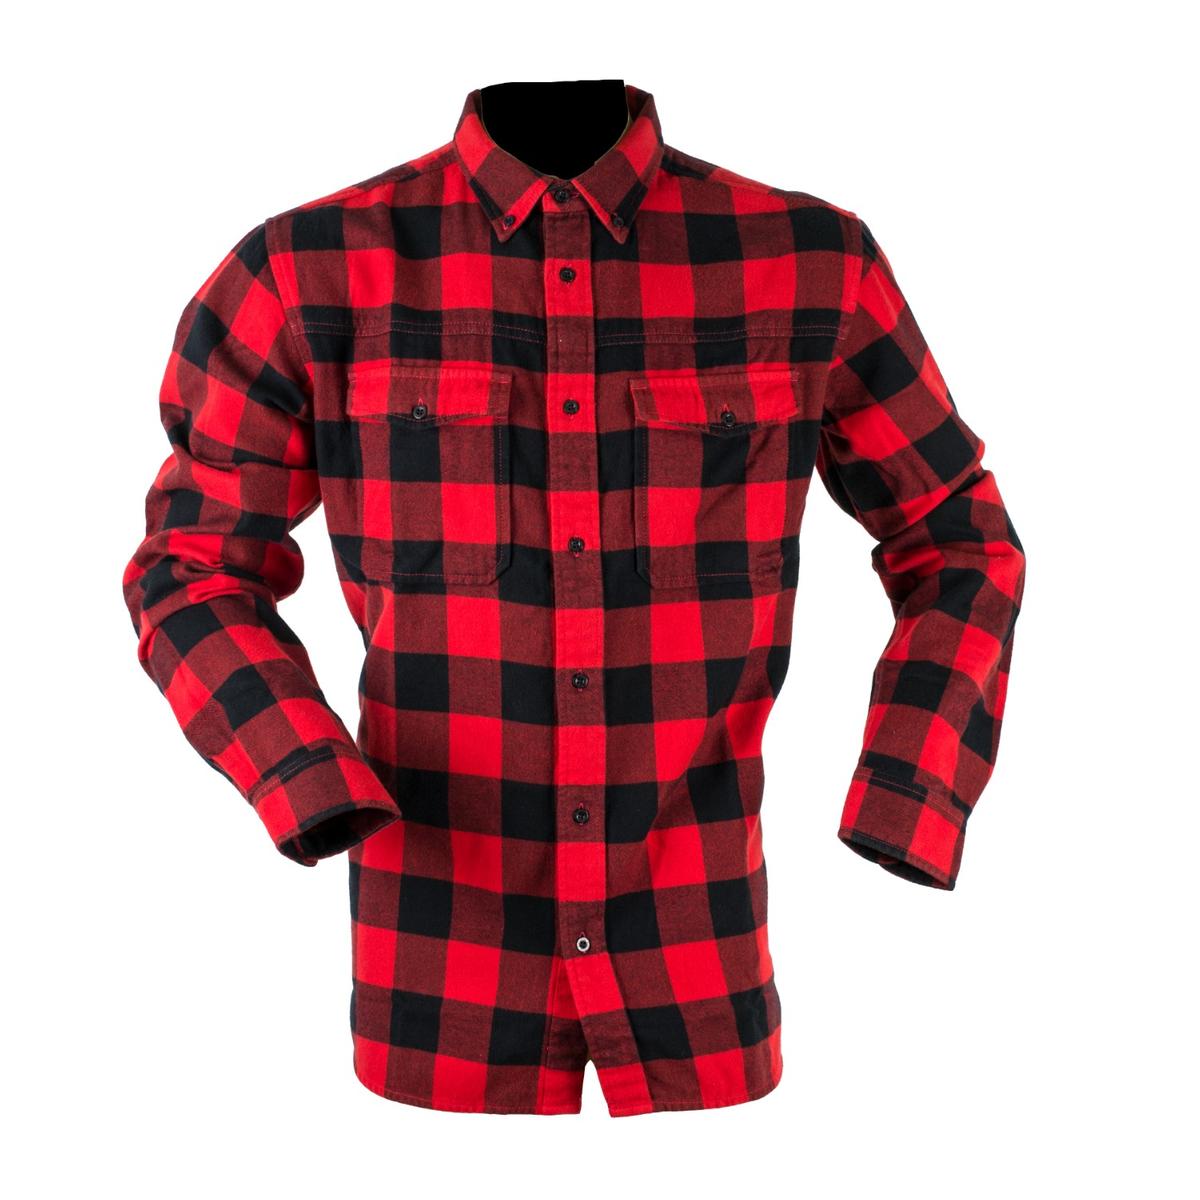 Ridgeline Classic Checked Shirt Red and Black Shirts Men's | eBay